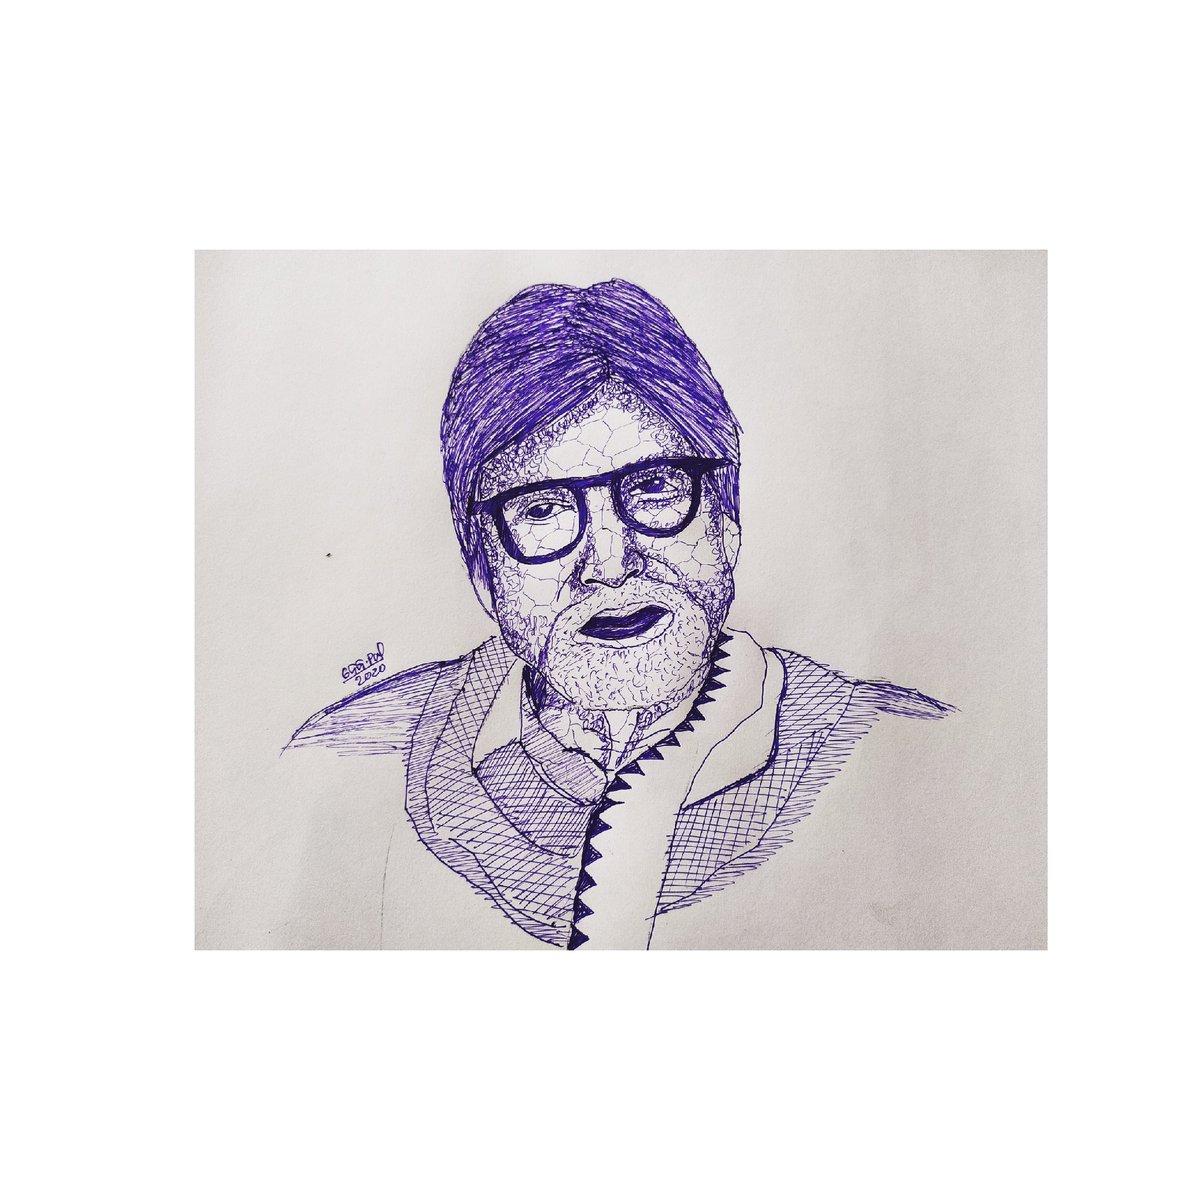 My ball pen rapid sketch abt my favourite bollywood star @SrBachchan . Heartily dedicated to him. 
@ABFAIndia @prashantkawadia @AmitabBacchan5 @juniorbachchan @AbhishekB_Fanz